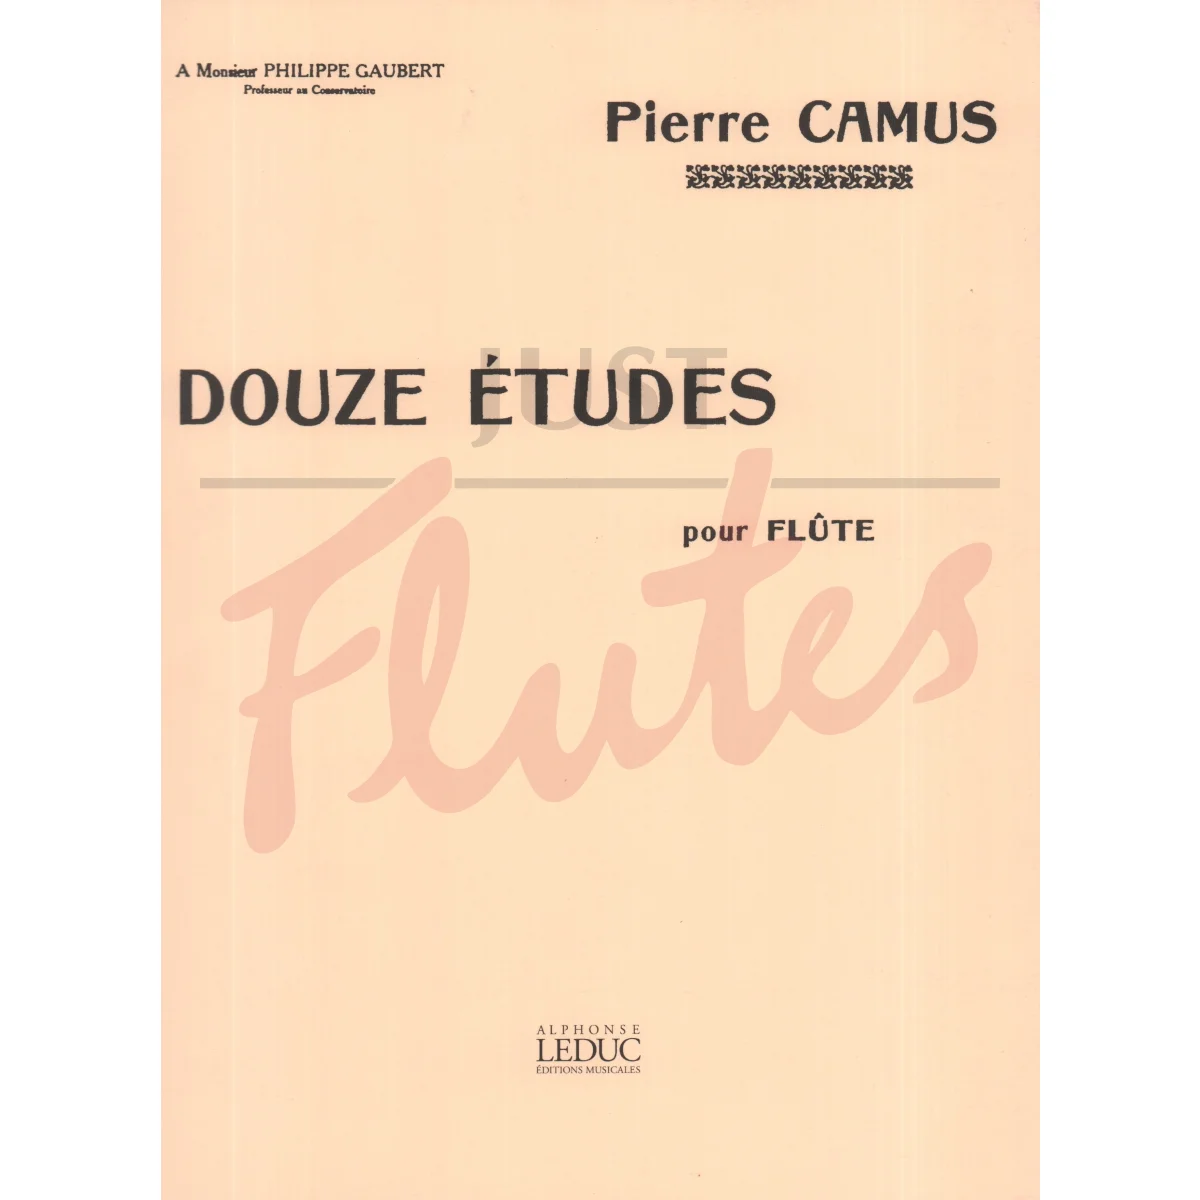 Twelve Etudes for Flute